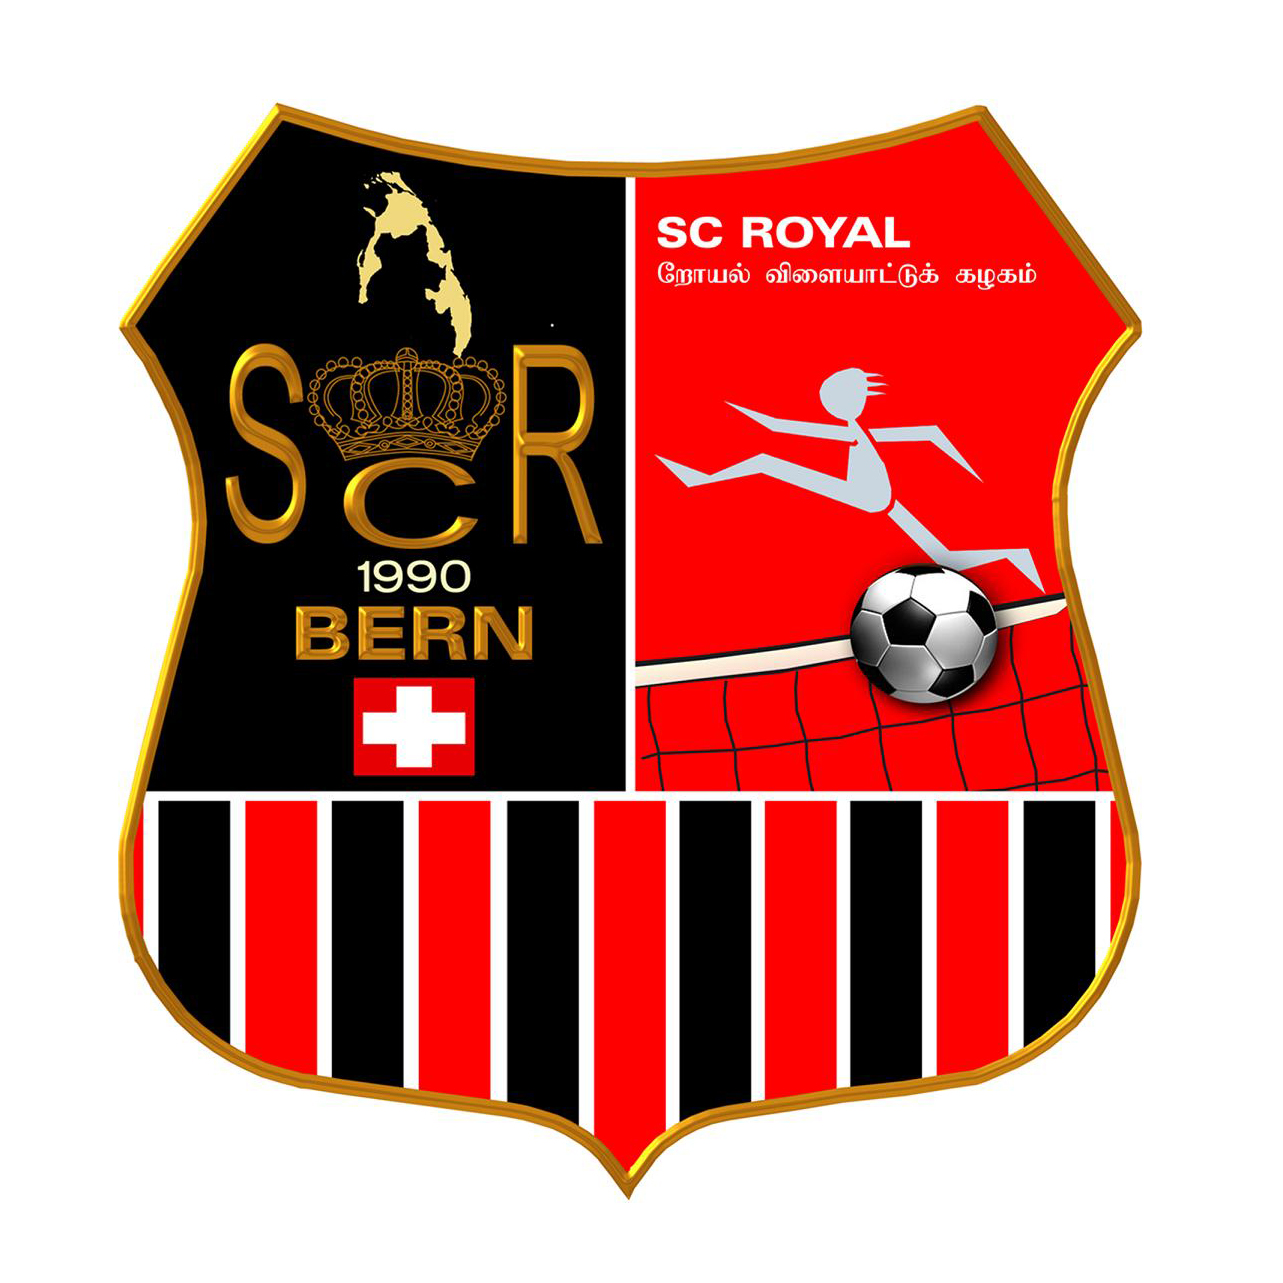 SC Royal Bern